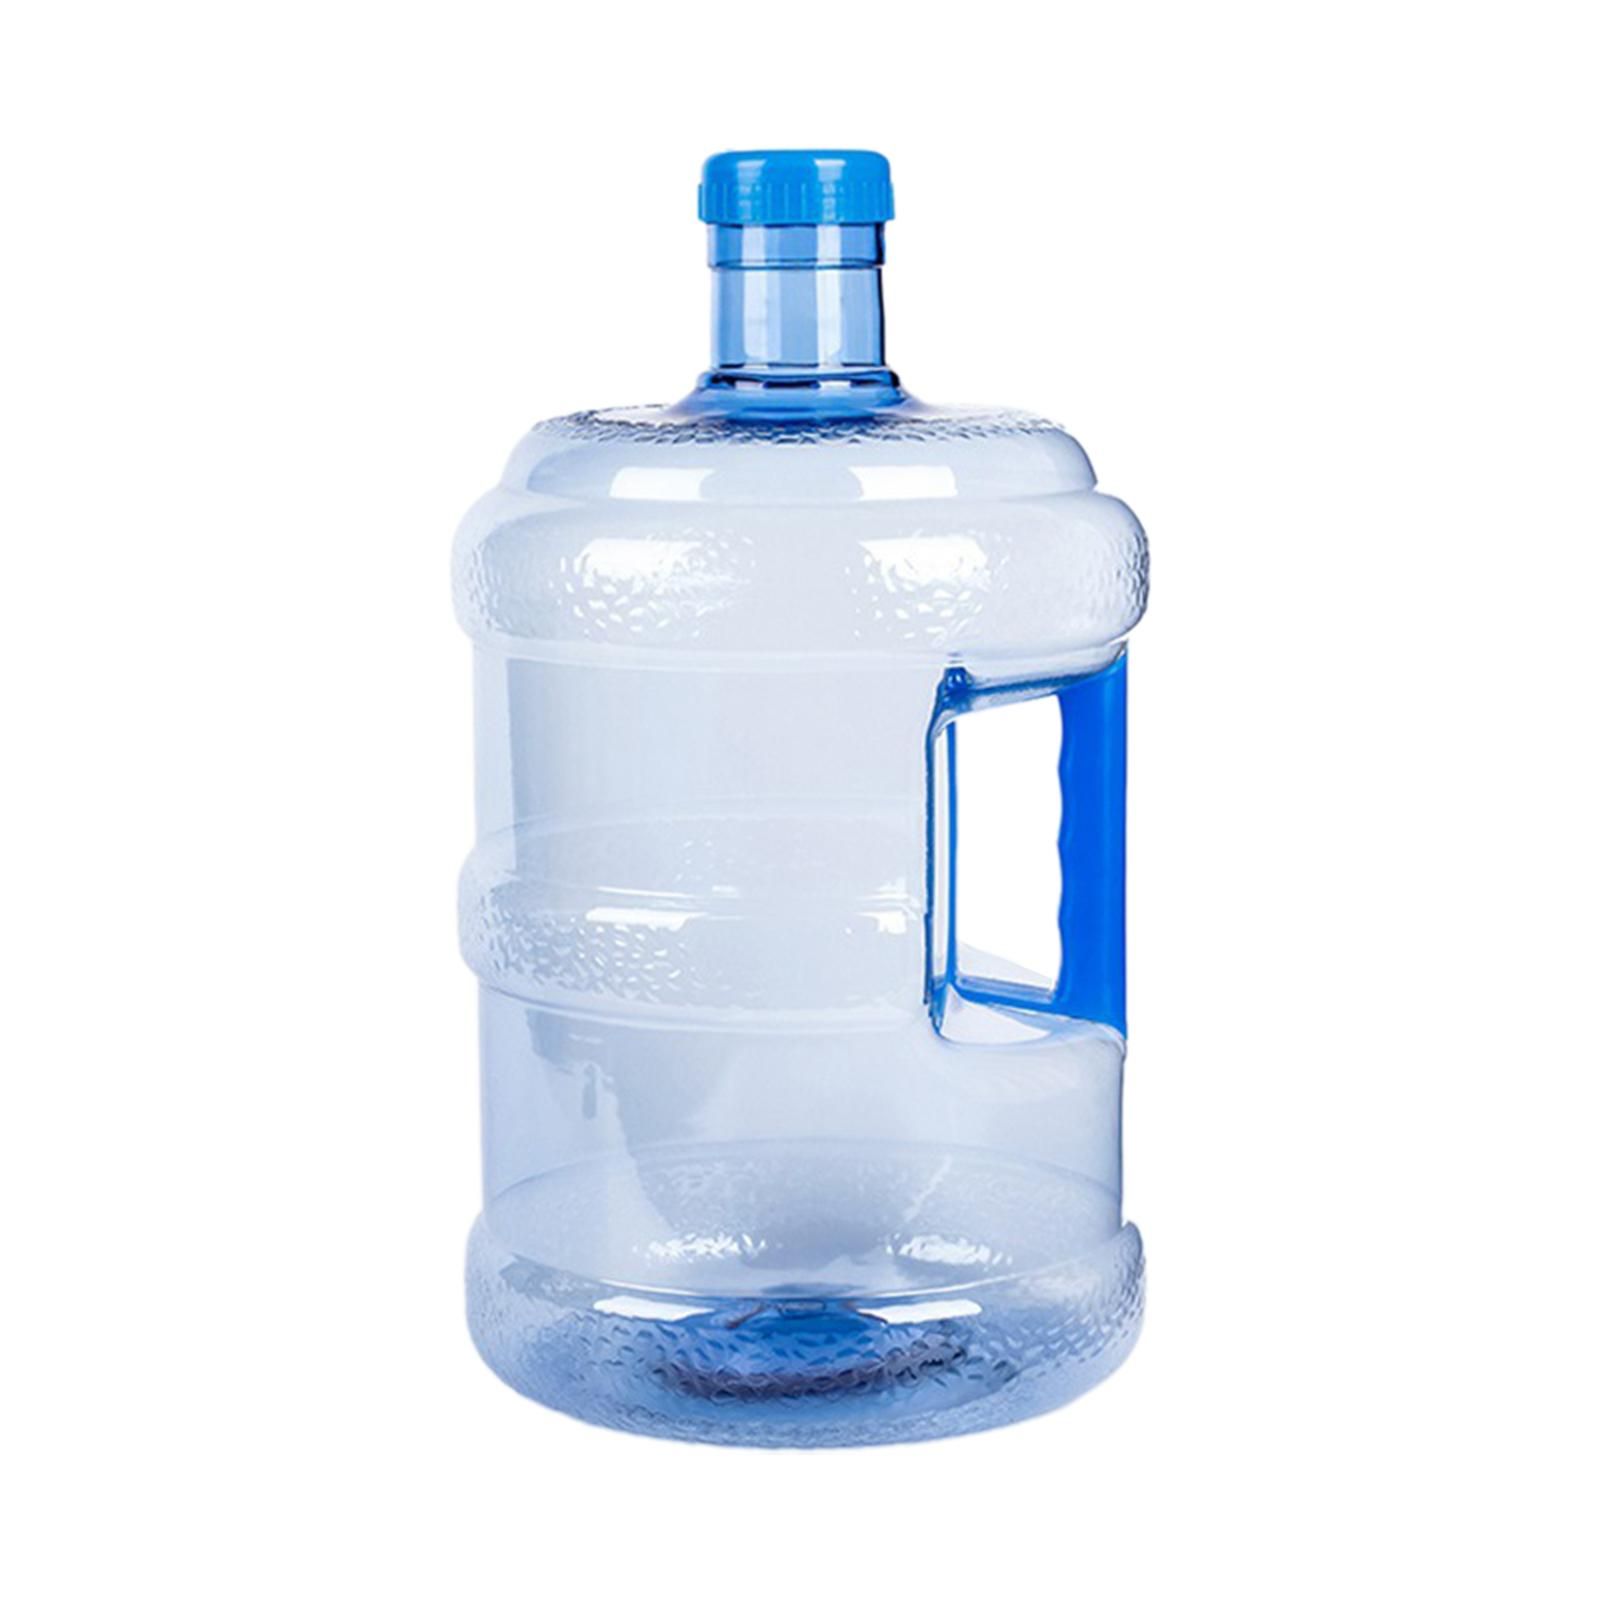 Пластиковые бутылки для воды 5 литров. Кулер для 5л бутылей MCM. Бутыль 10л ПЭТ 4630057. 5 L Water Bottle. Бутыль для воды 12.5 литров.